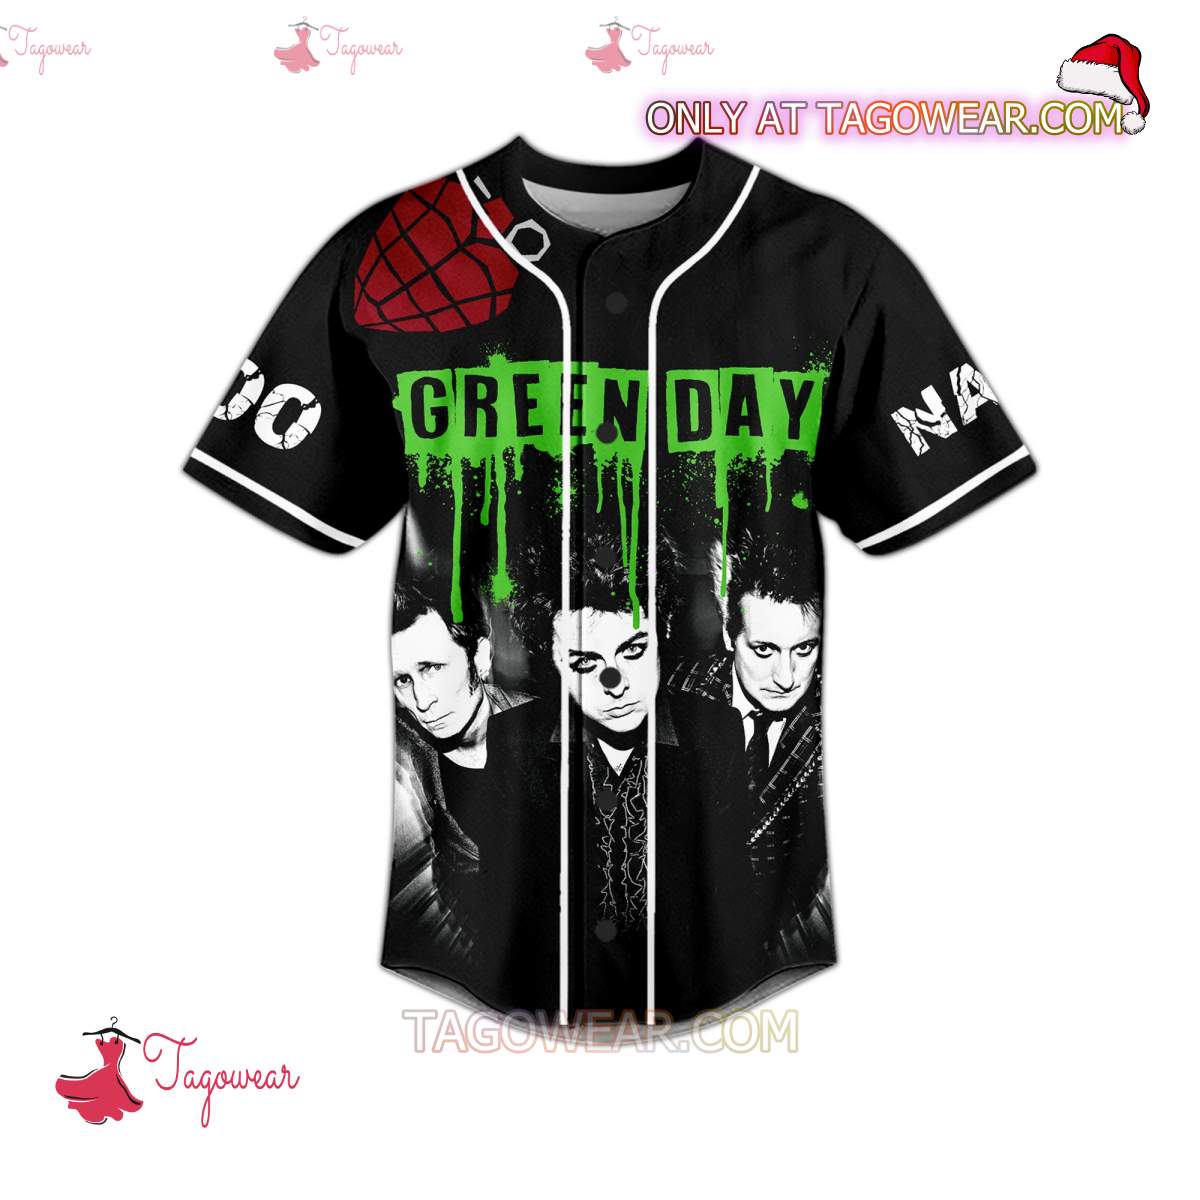 Green Day The Saviors Personalized Baseball Jersey a